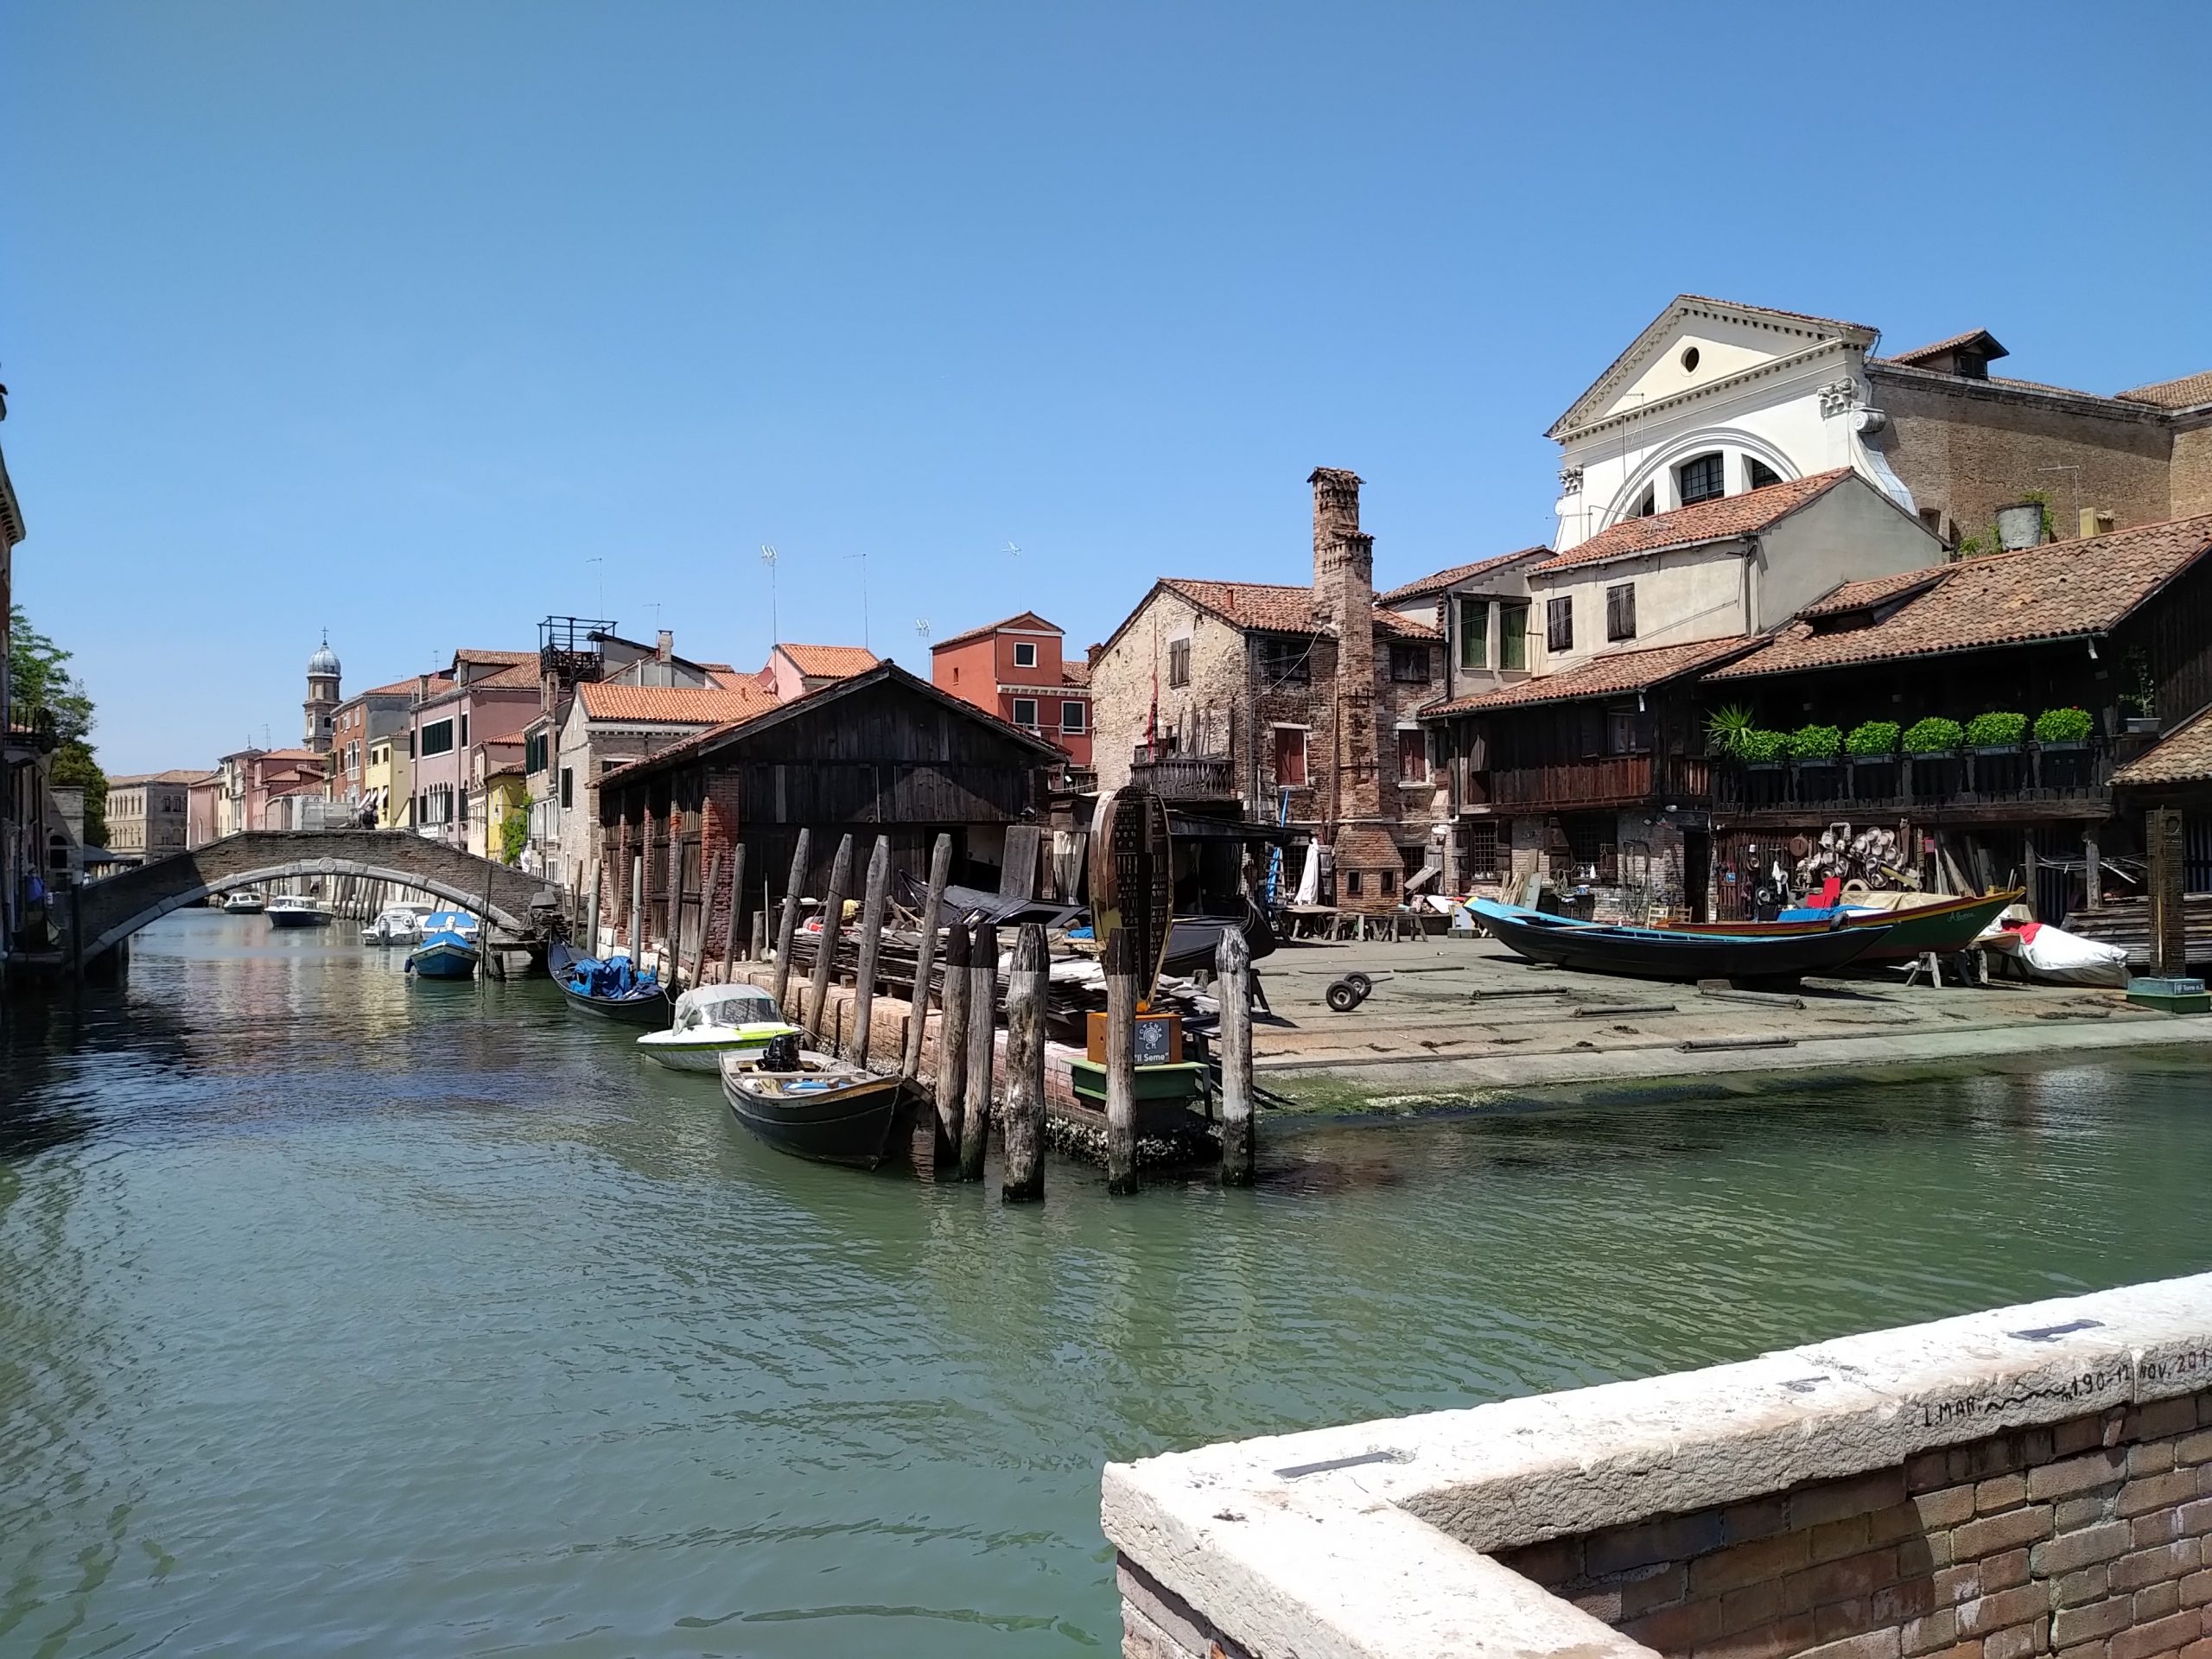 A forgotten ship maintenance area in Venice